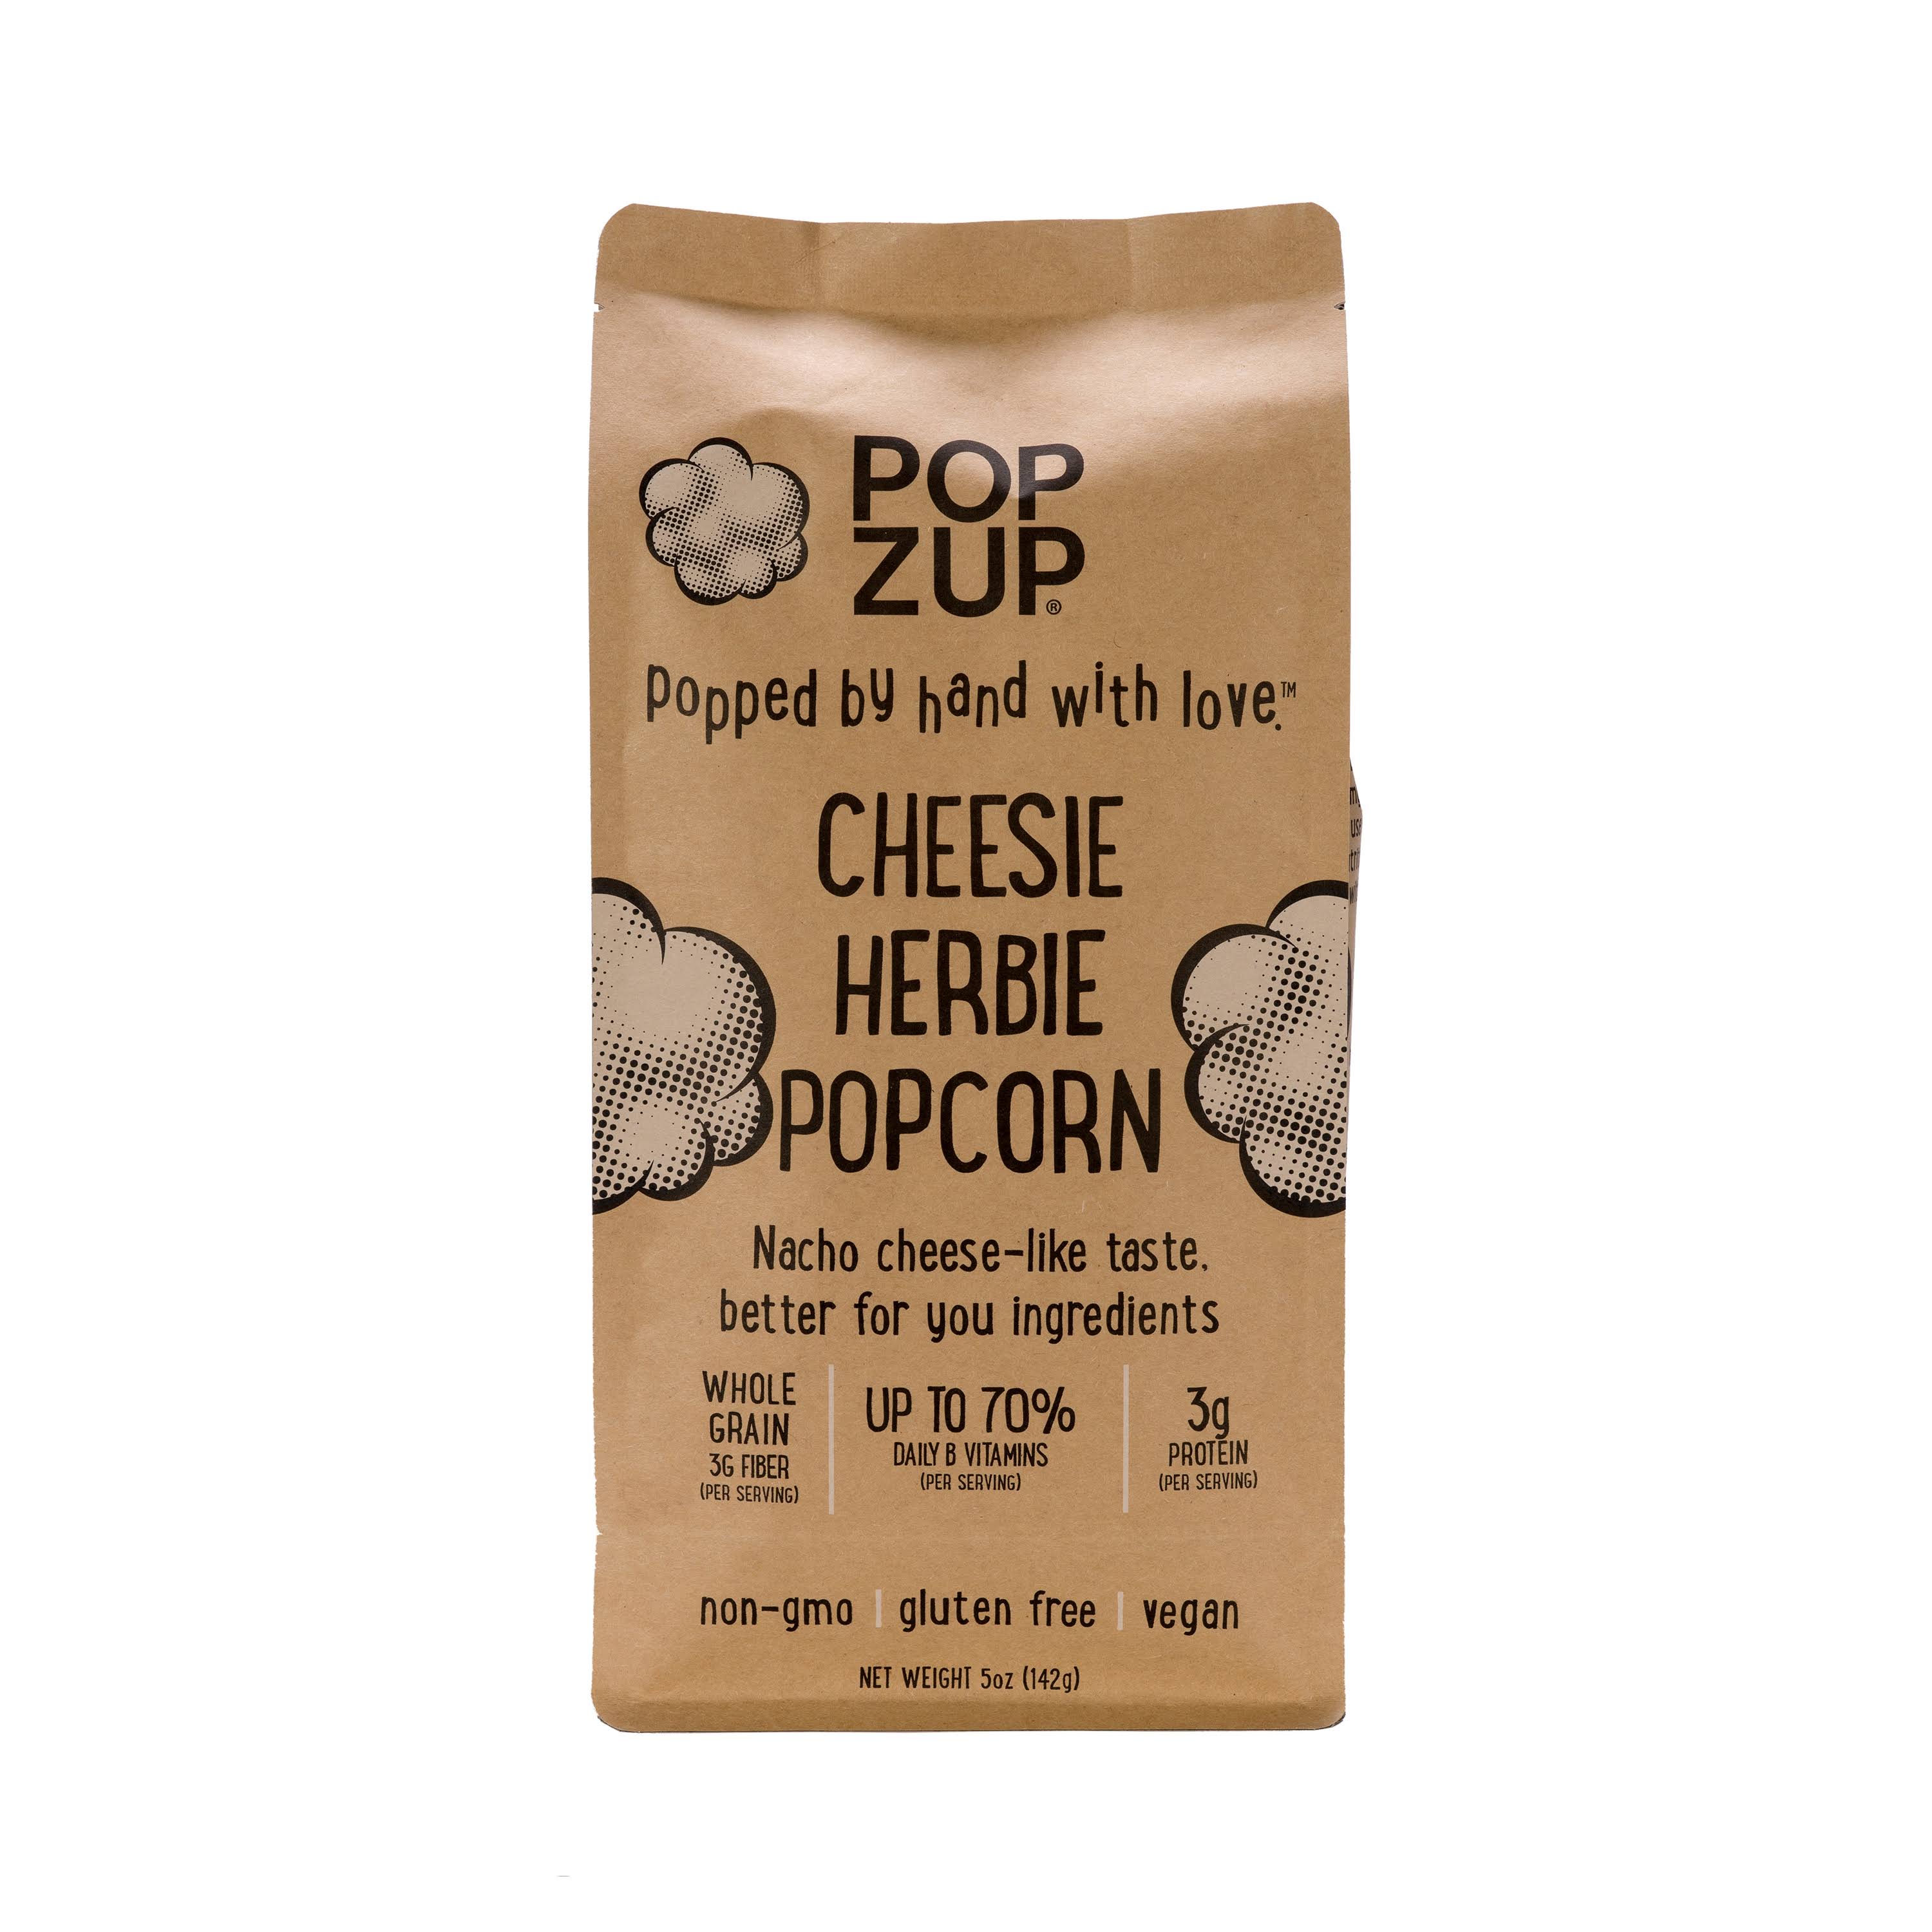 Popzup Cheesie Herbie Popcorn 5 oz